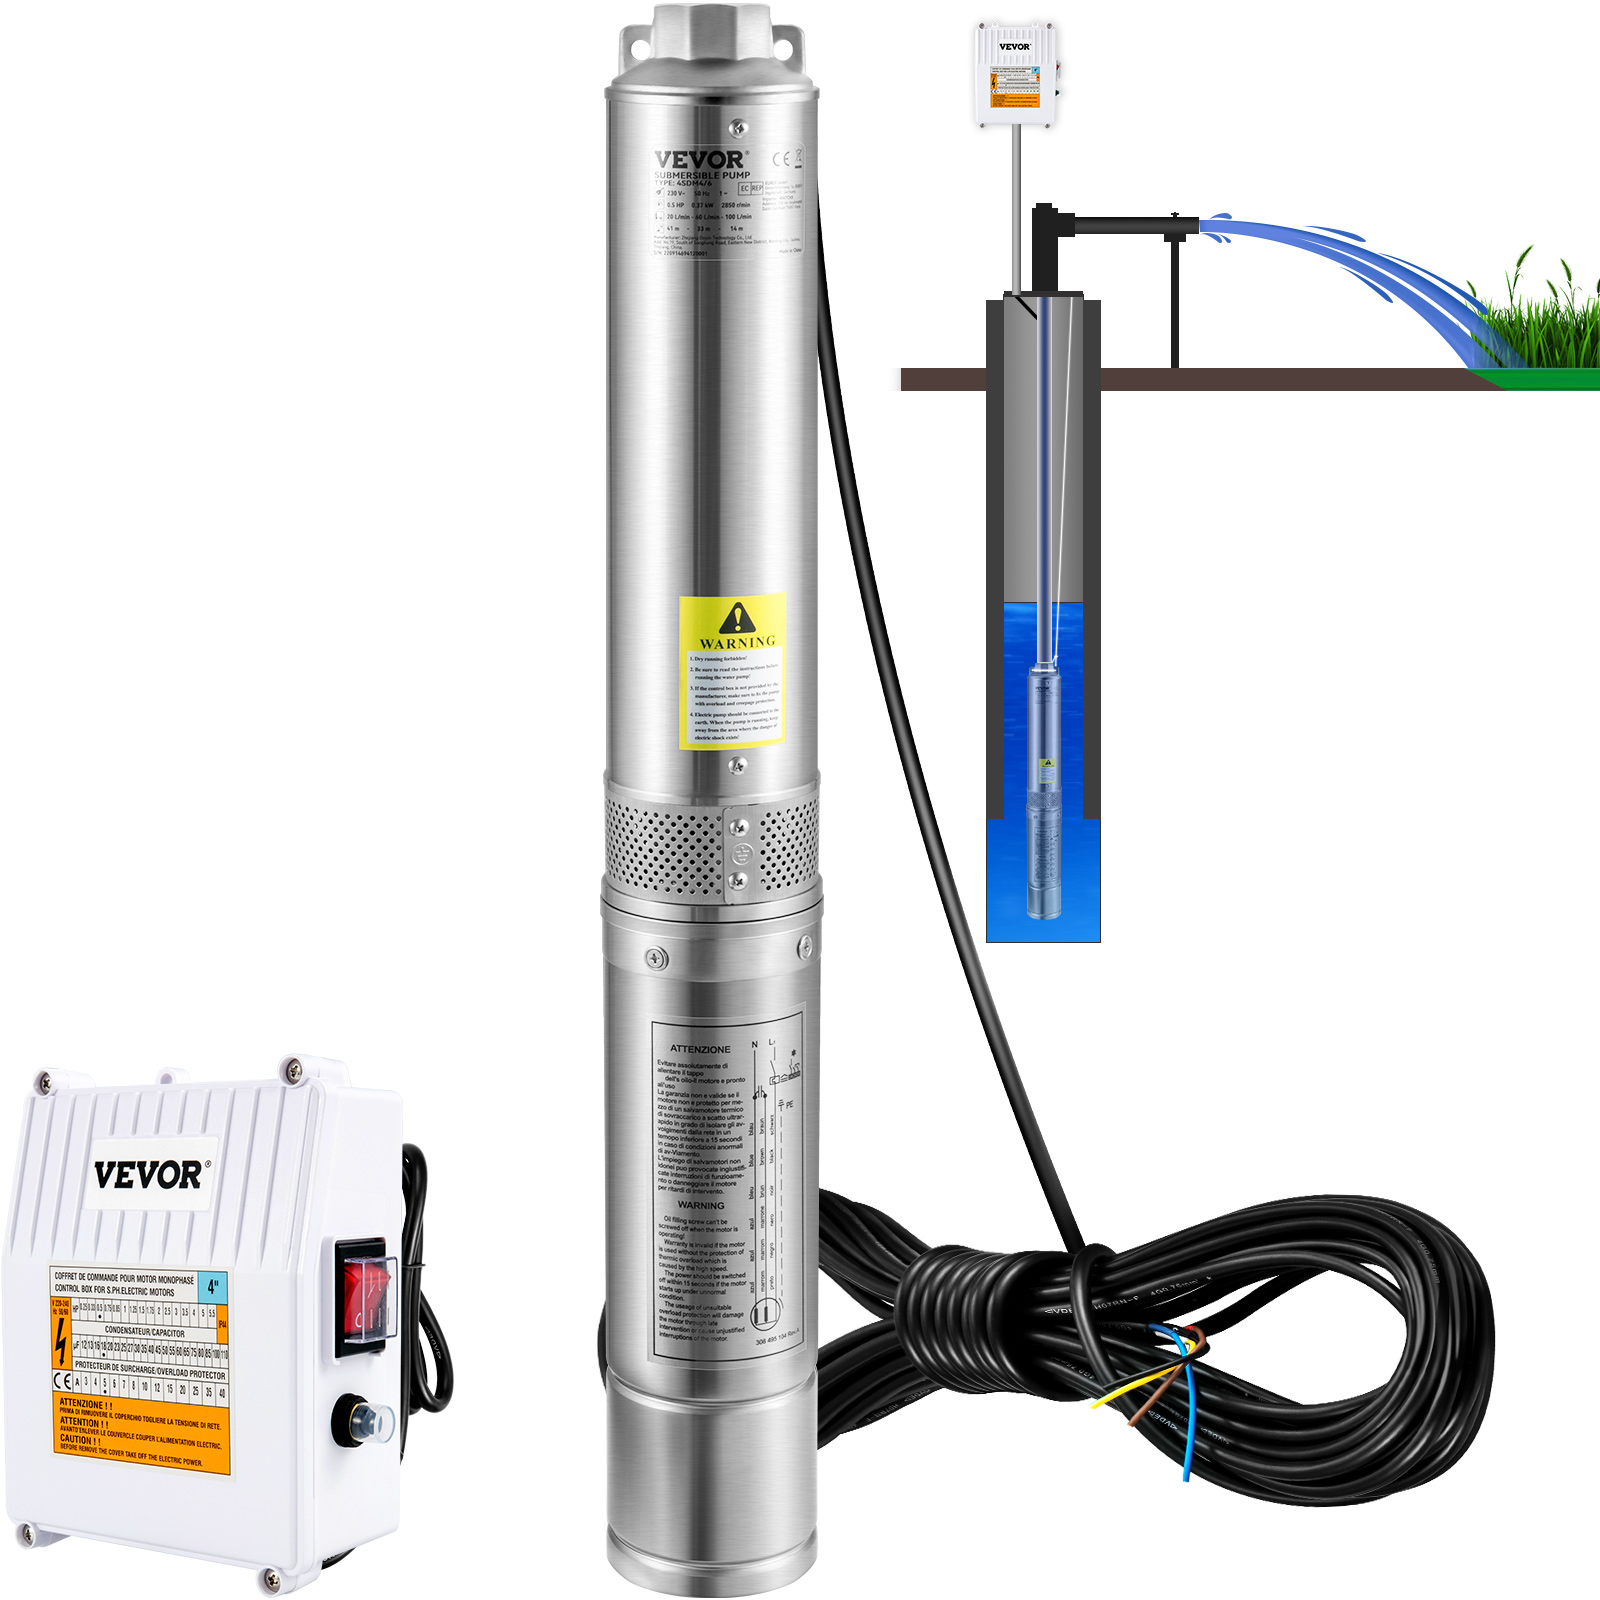 Happybuy Recirculating Pump, 93W 110V Water Circulator Circulating